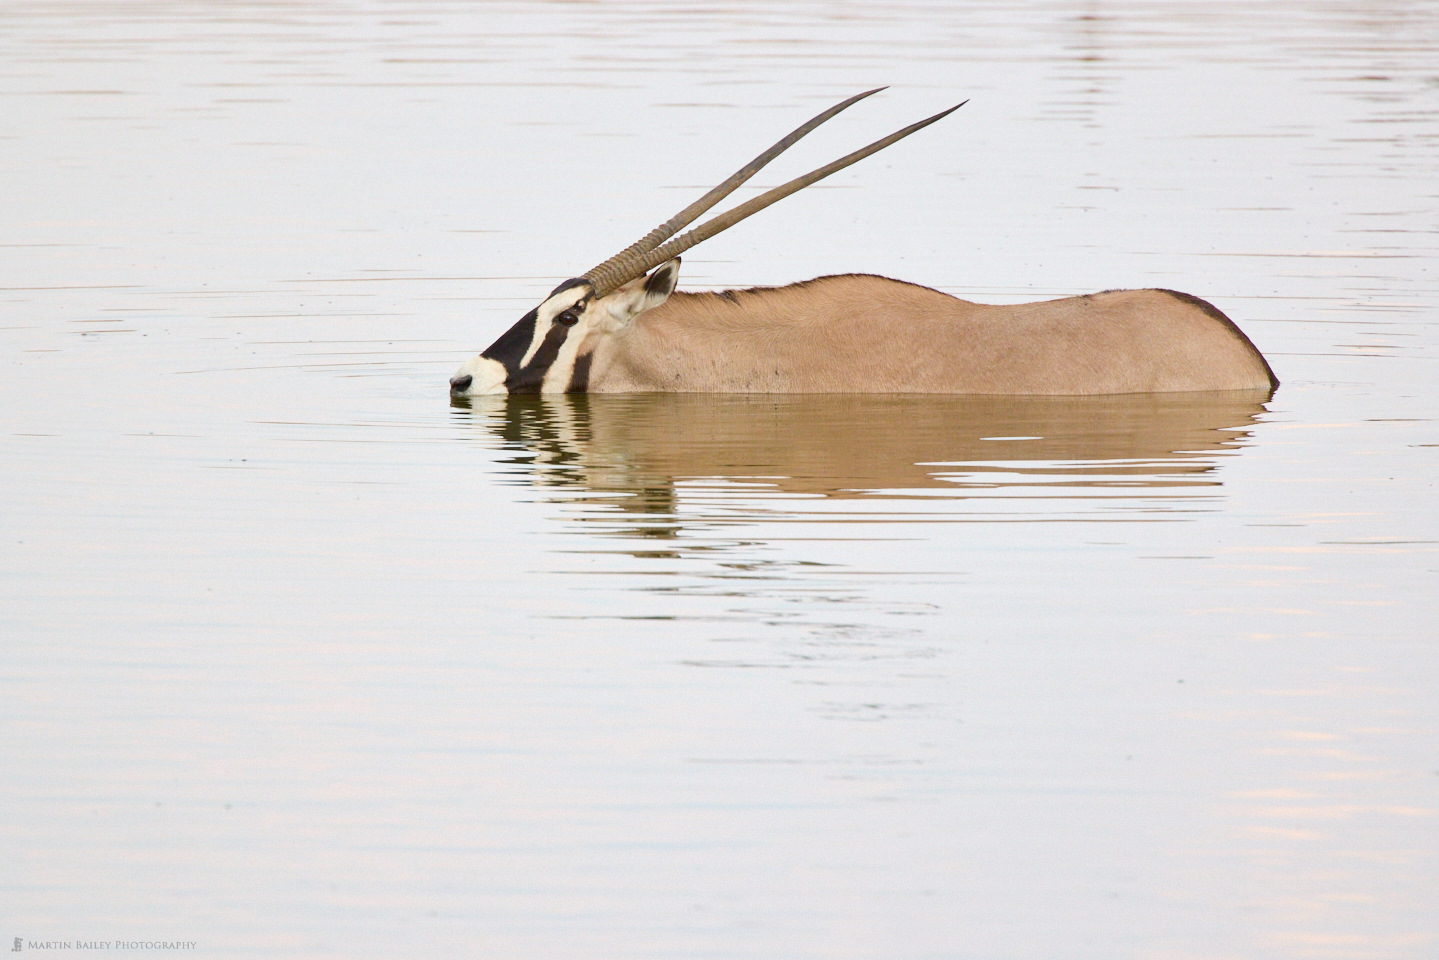 Half-Submerged Oryx